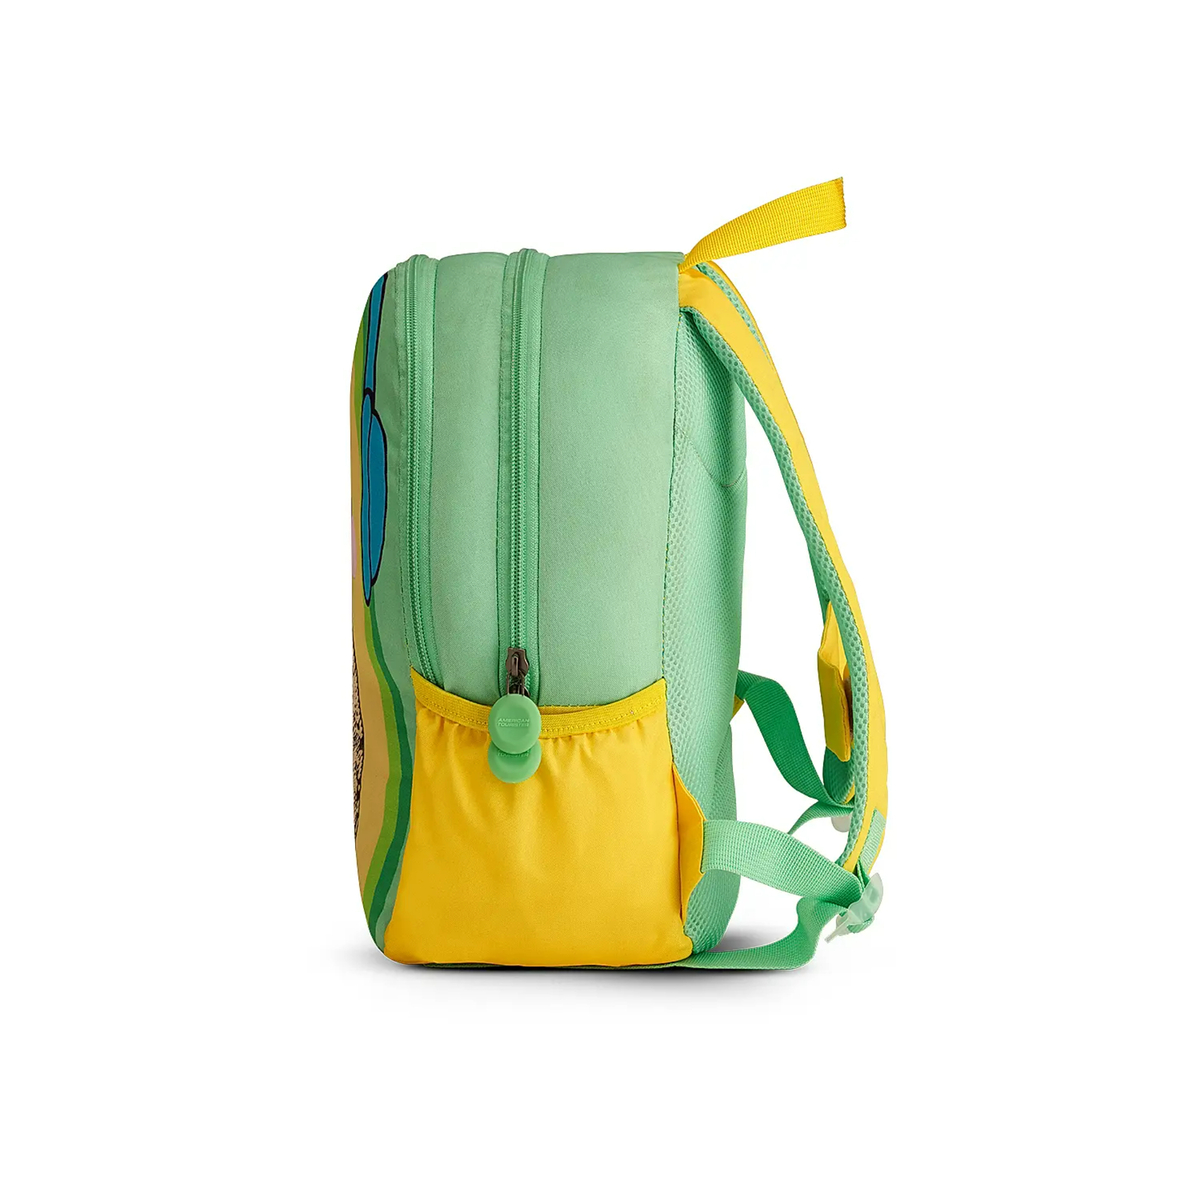 American Tourister Yoodle 2.0 School Bagpack, 10.5 L Volume, Avocado Green